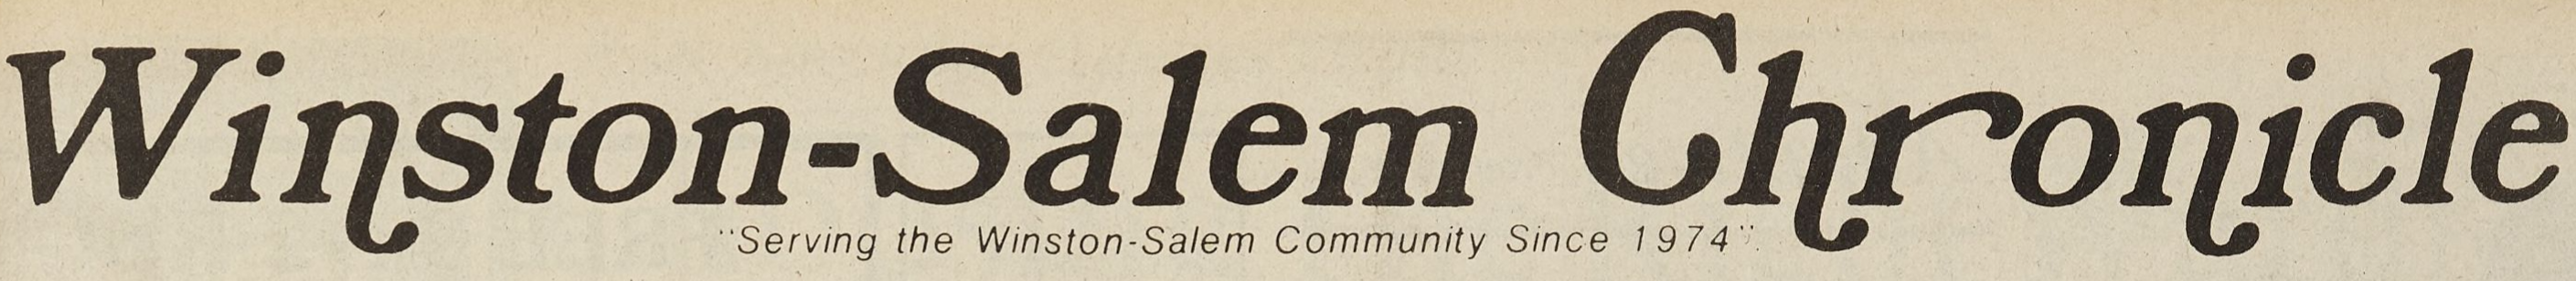 Winston Salem Chronicle header. Under the newspaper name it reads: serving the Winston-Salem community since 1974.